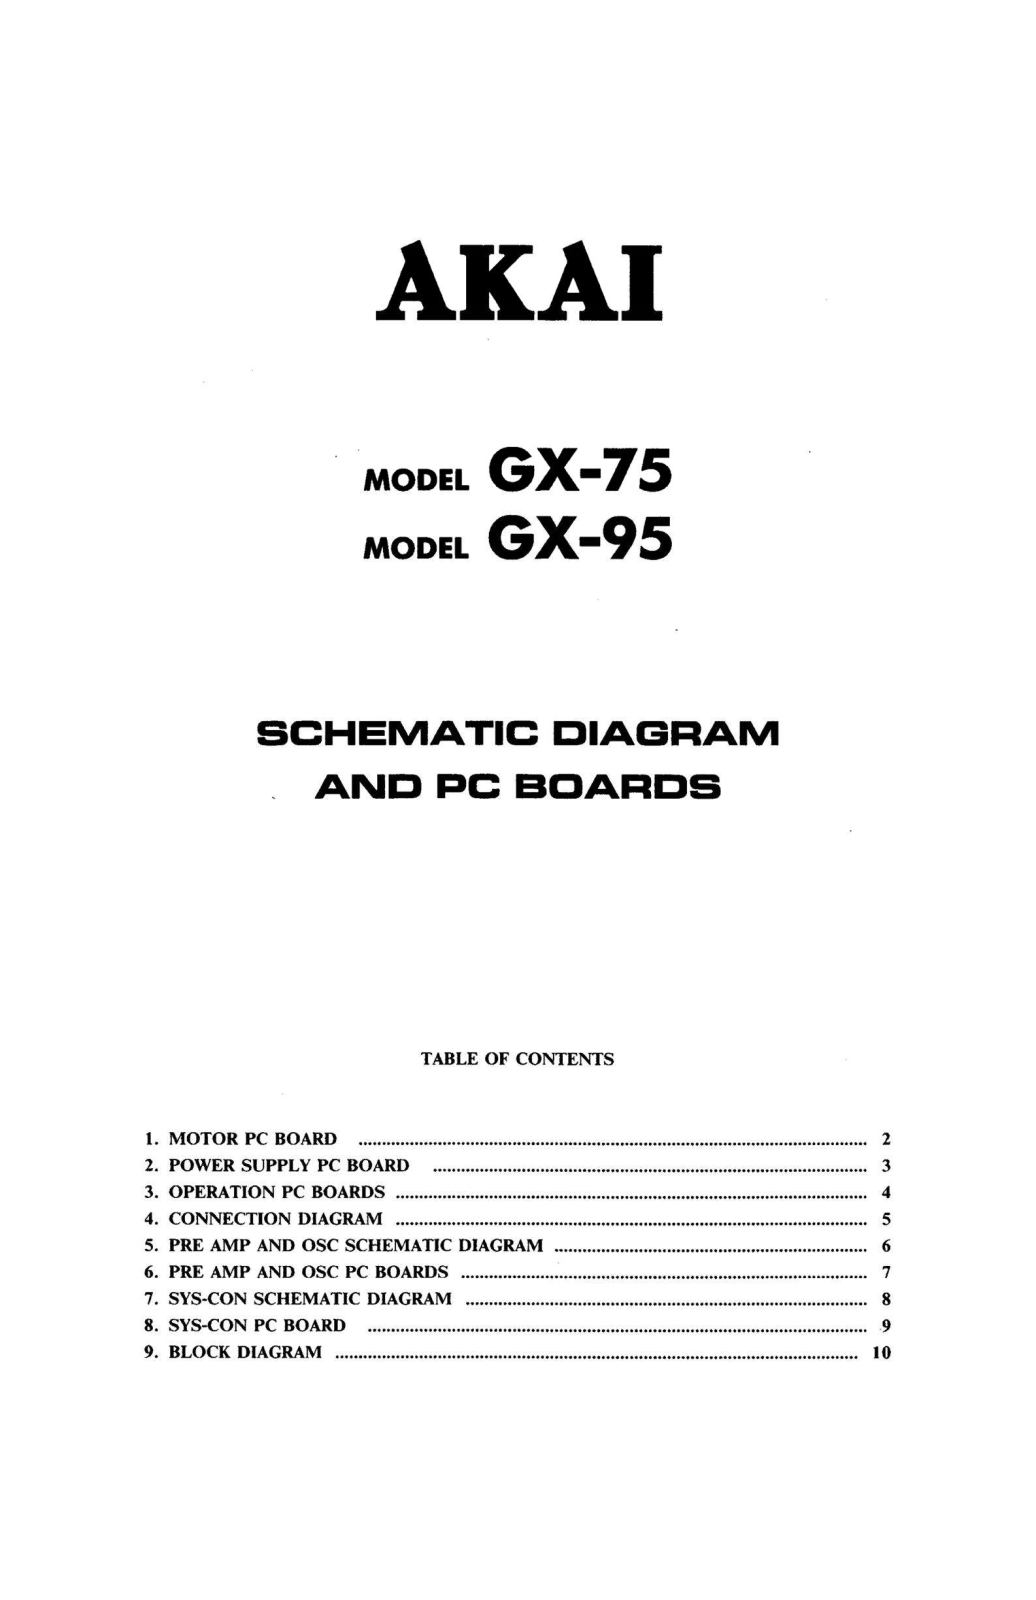 Akai GX-75, GX-95 Schematic